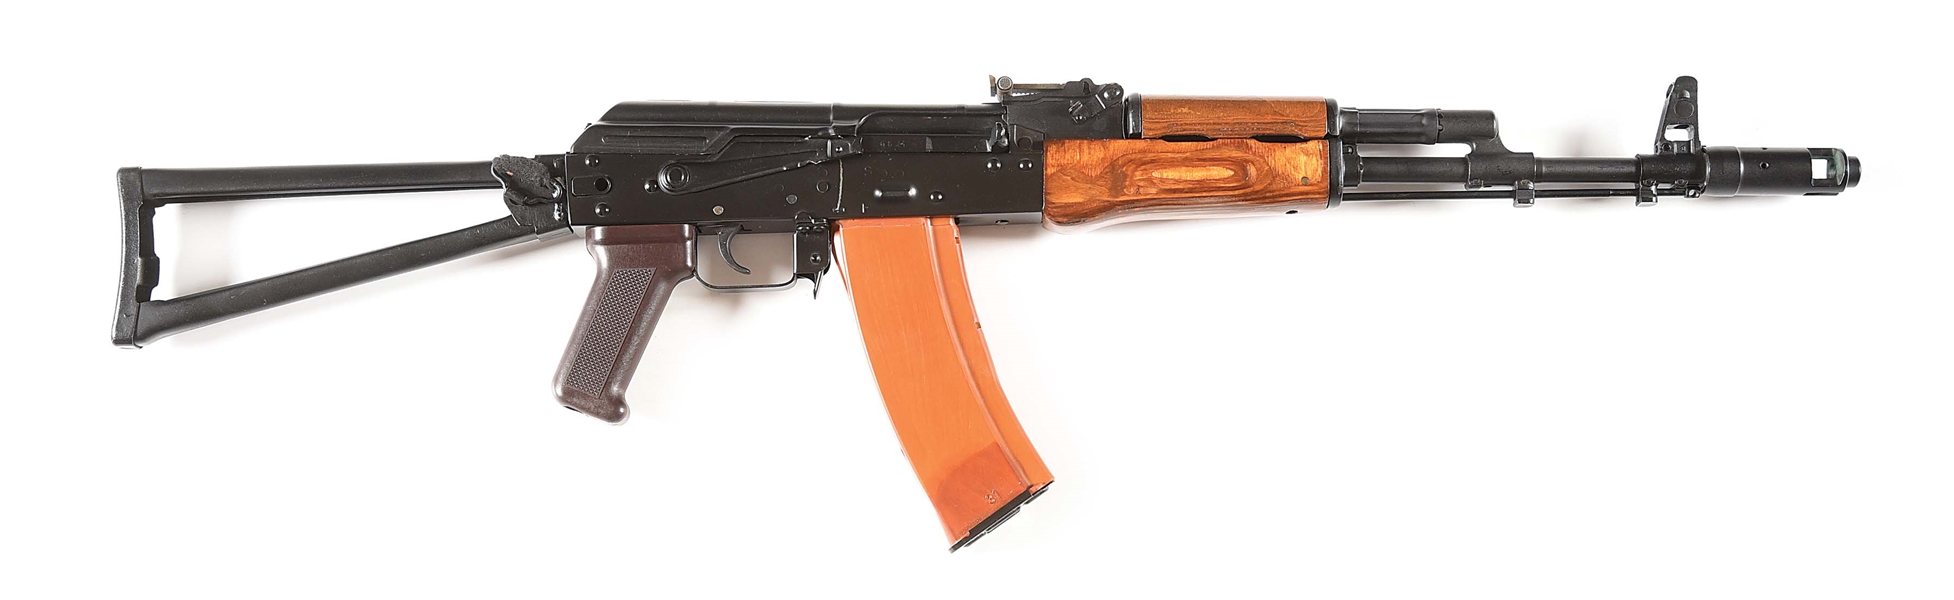 (M) BULGARIAN STYLE ITM ARMS COMPANY MODEL AK-74 SEMI-AUTOMATIC RIFLE.